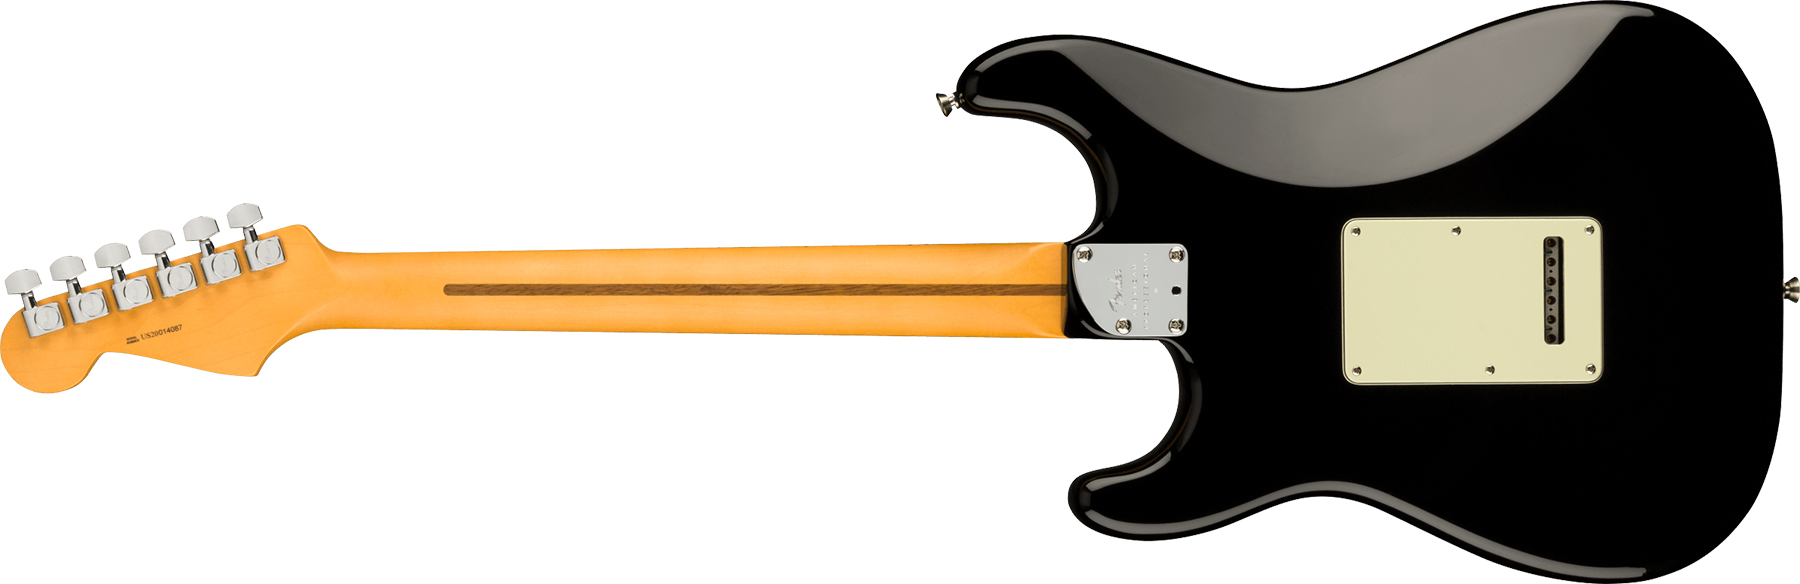 Fender Strat American Professional Ii Usa Mn - Black - Guitarra eléctrica con forma de str. - Variation 1